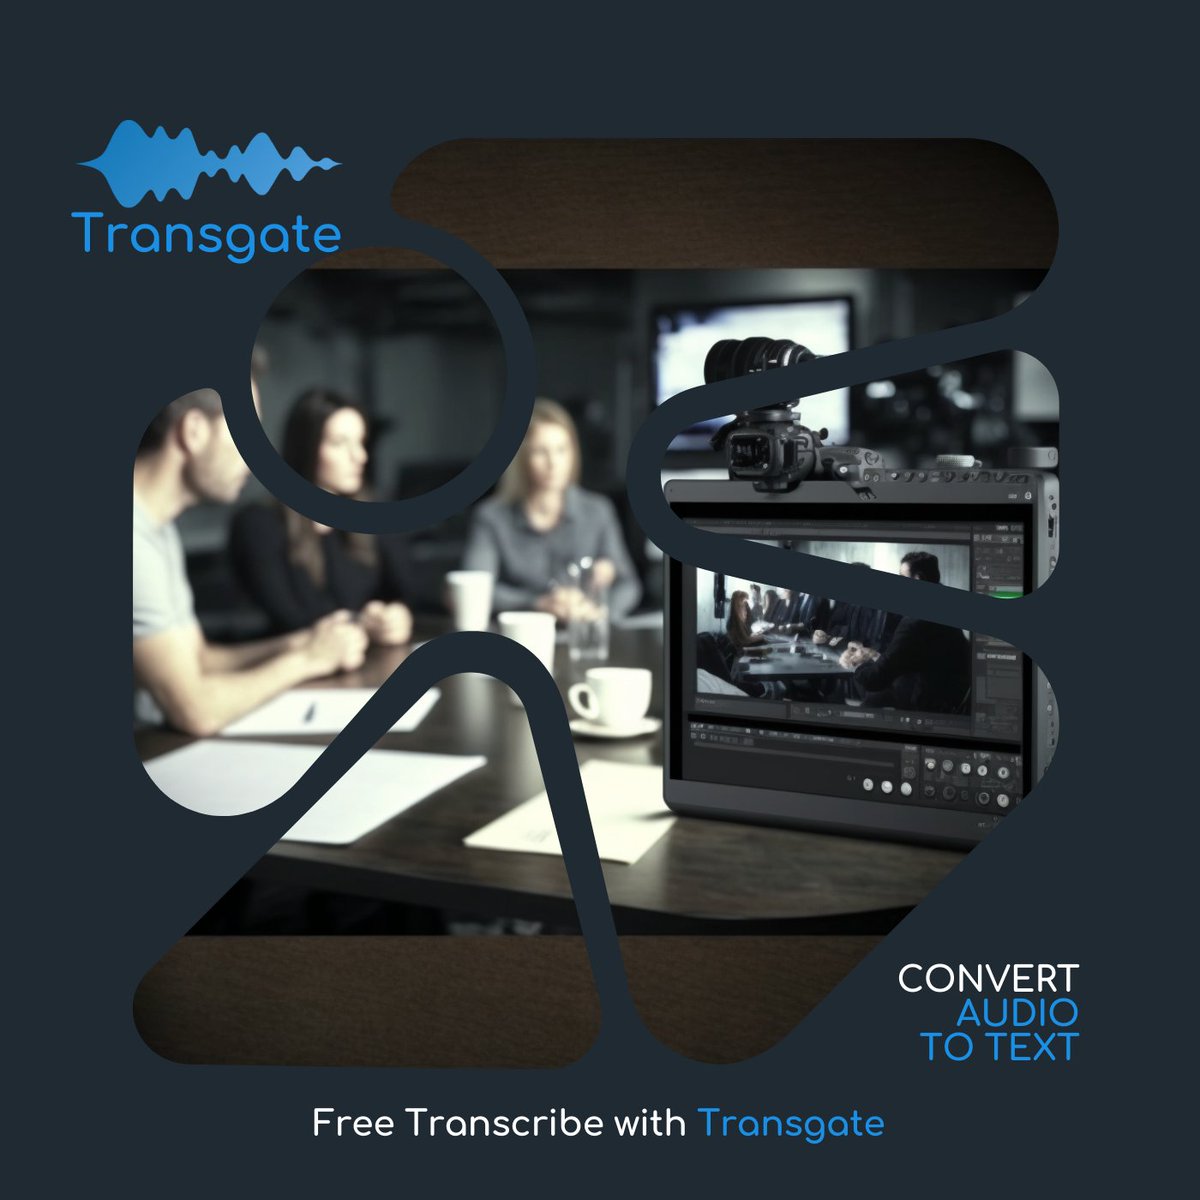 Convert audio to text easily with Transgate - simplifying your transcription needs.

Please Visit: transgate.ai 

#Transgate #accuracy #convertaudiototext #SpeechToText #AI #Productivity #transcription #Efficiency #SaveTime #AudioToText #PayAsYouGo #AITranscription